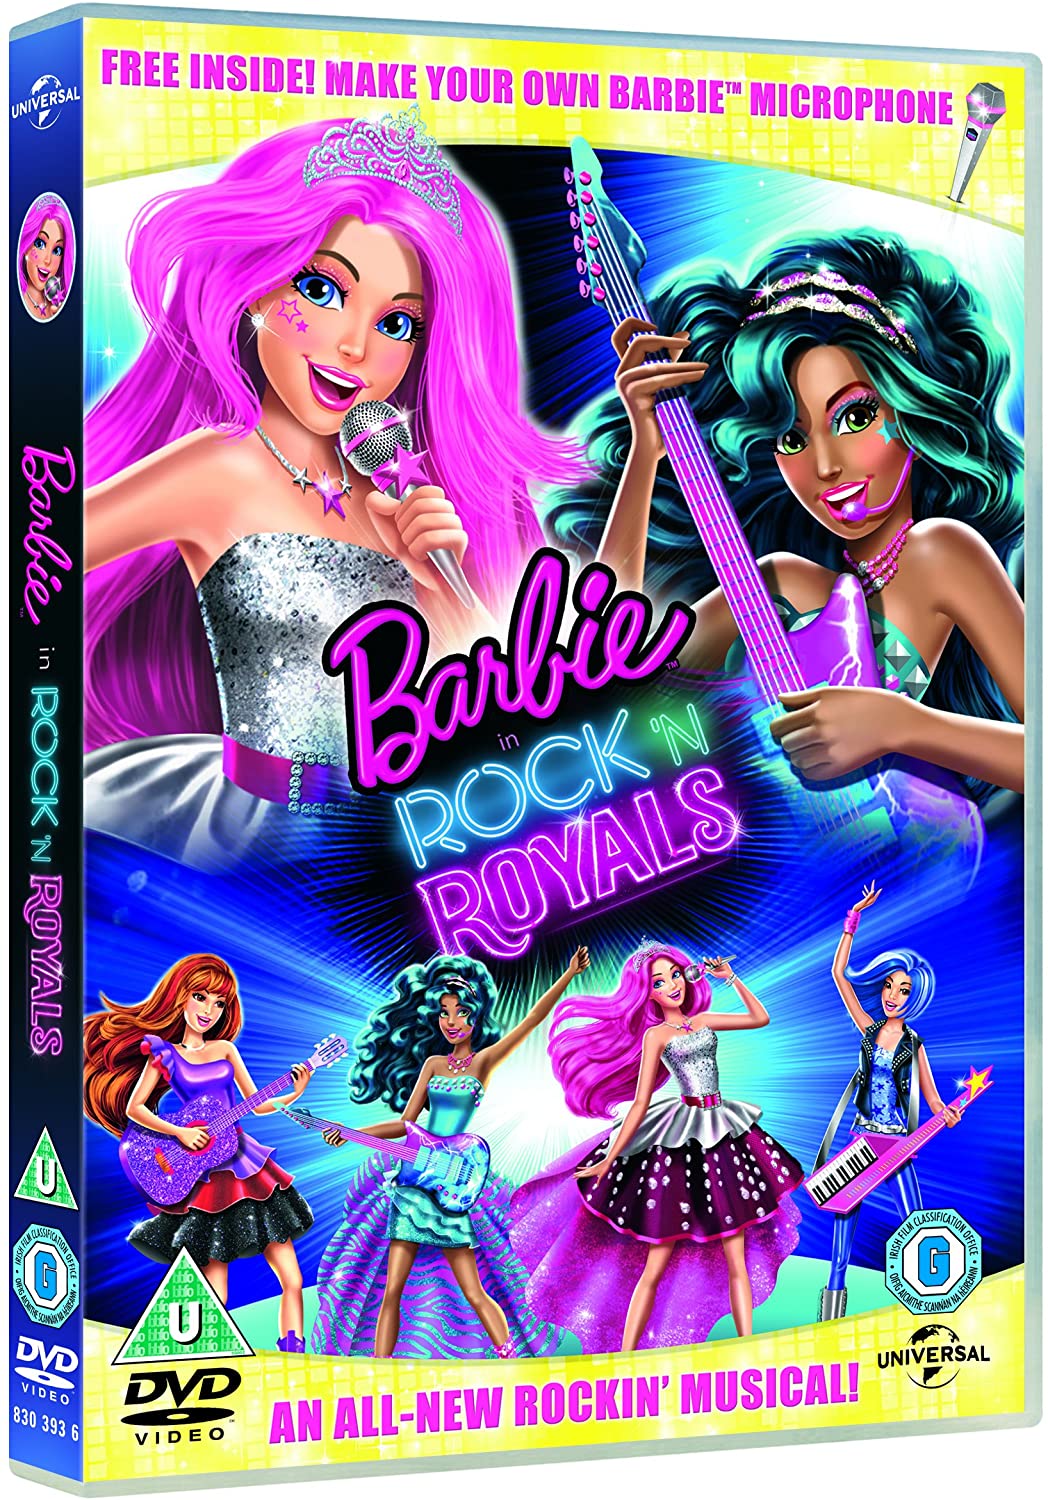 Barbie: Rock 'N Royals [Includes Gift] (DVD)